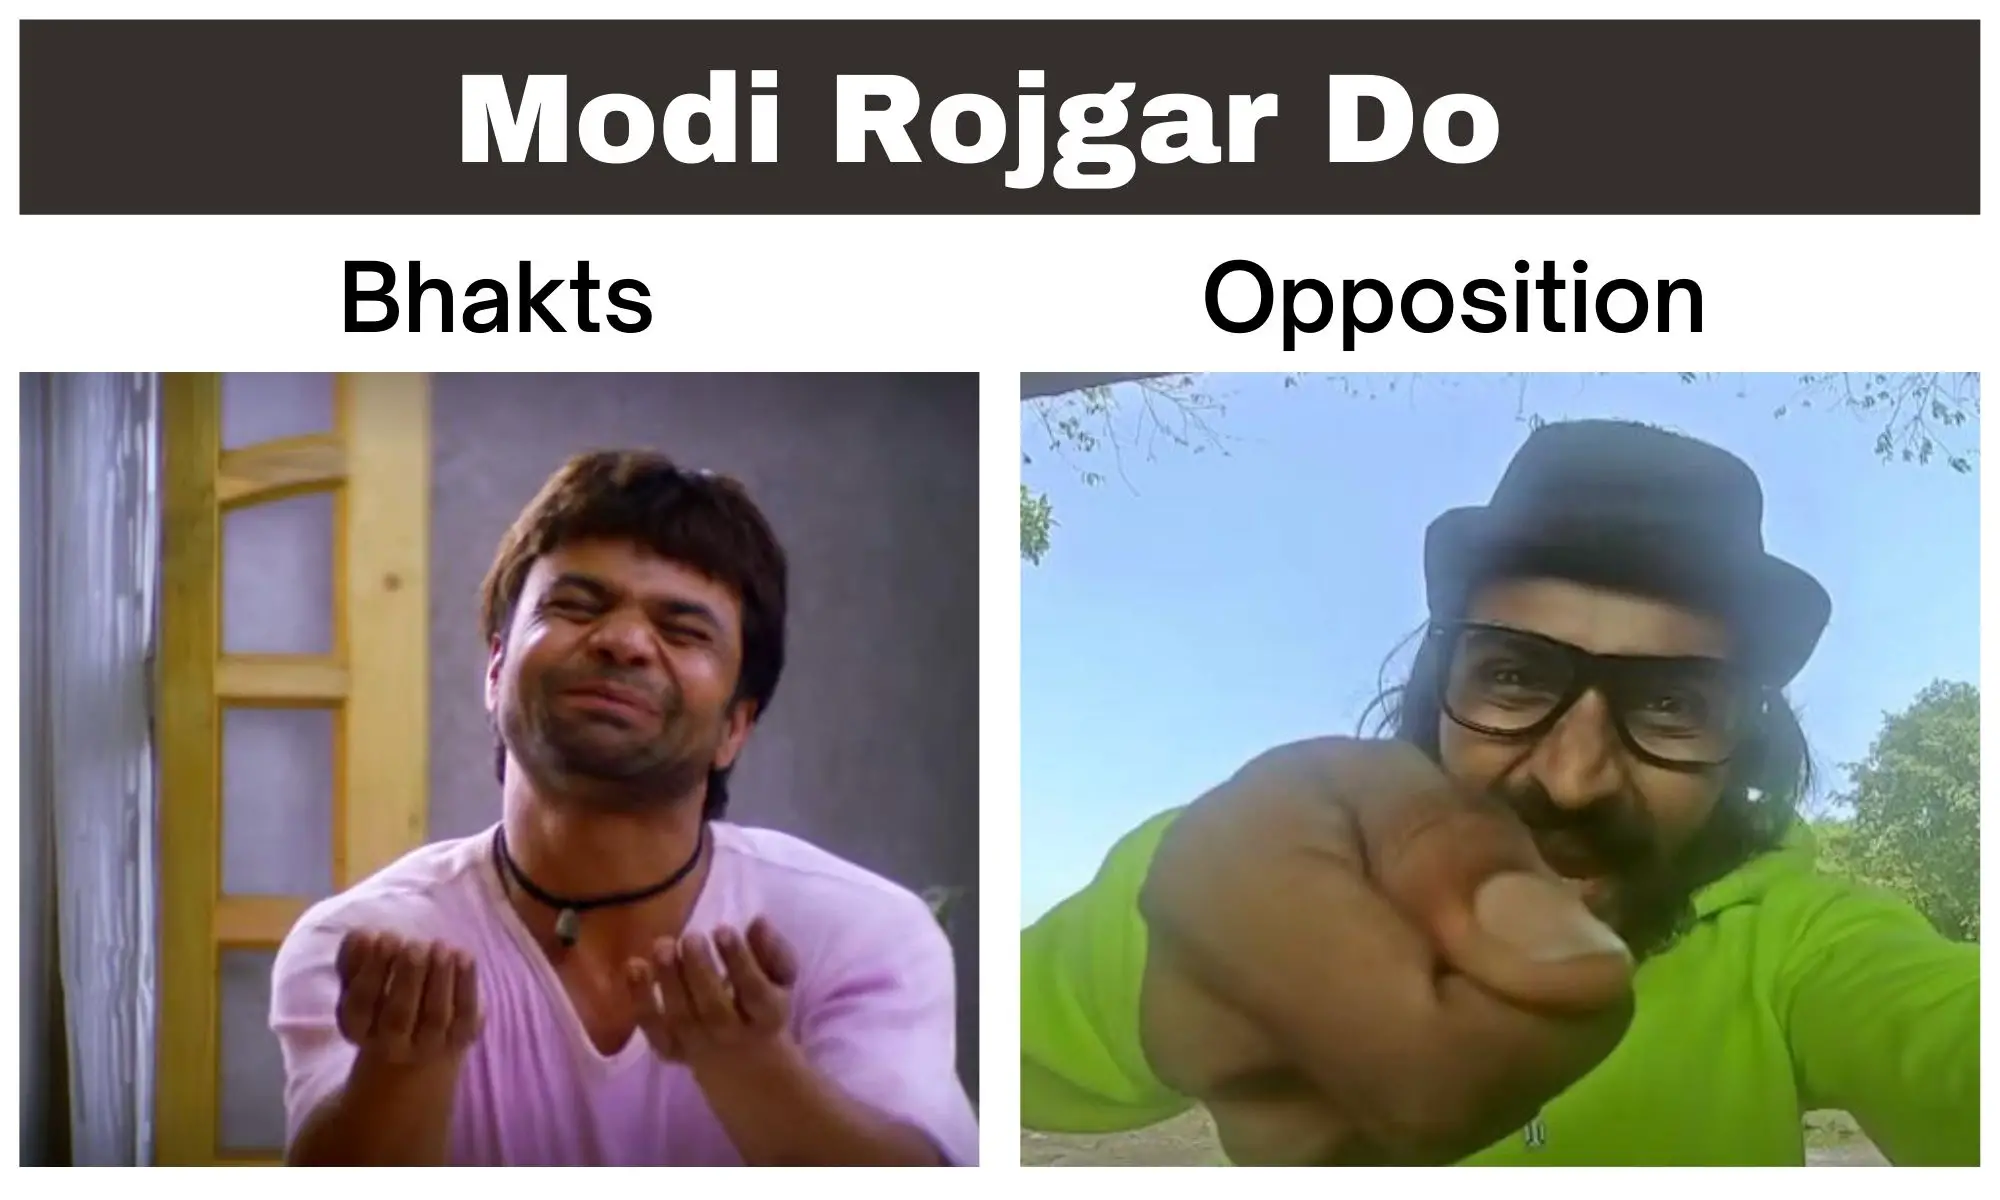 Modi Rojgar Do Meme on Unemployment